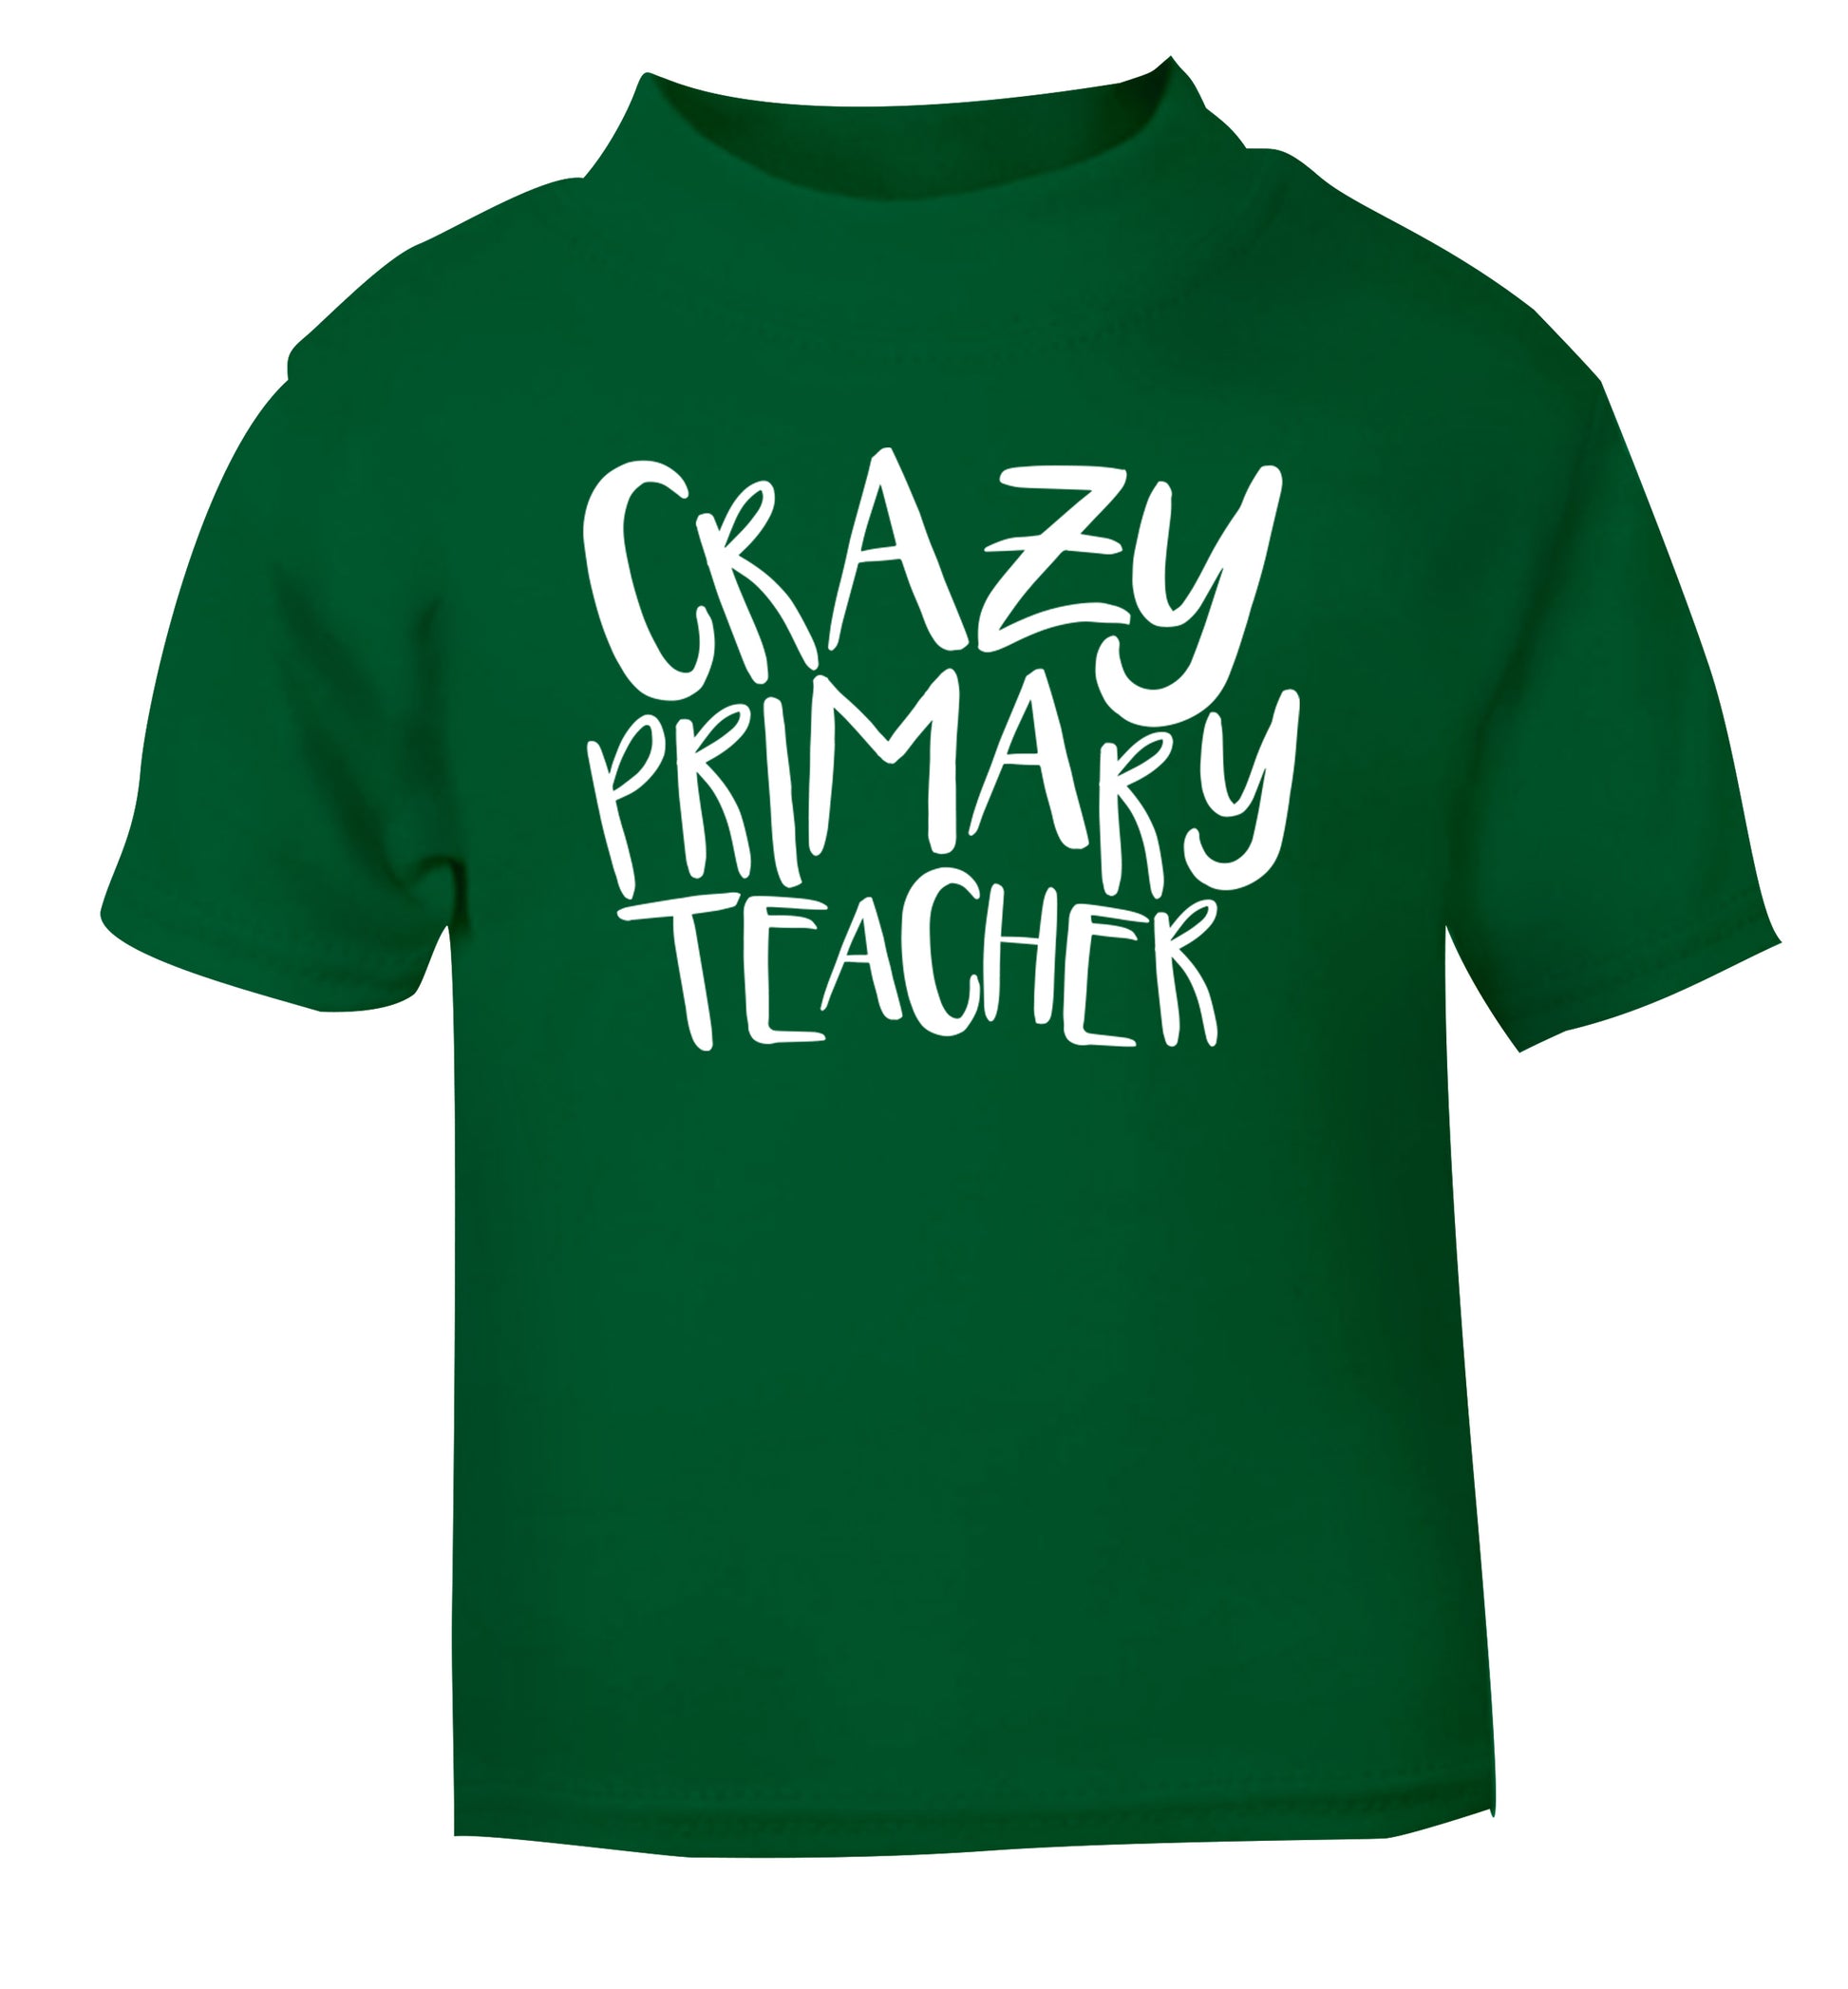 Crazy primary teacher green Baby Toddler Tshirt 2 Years